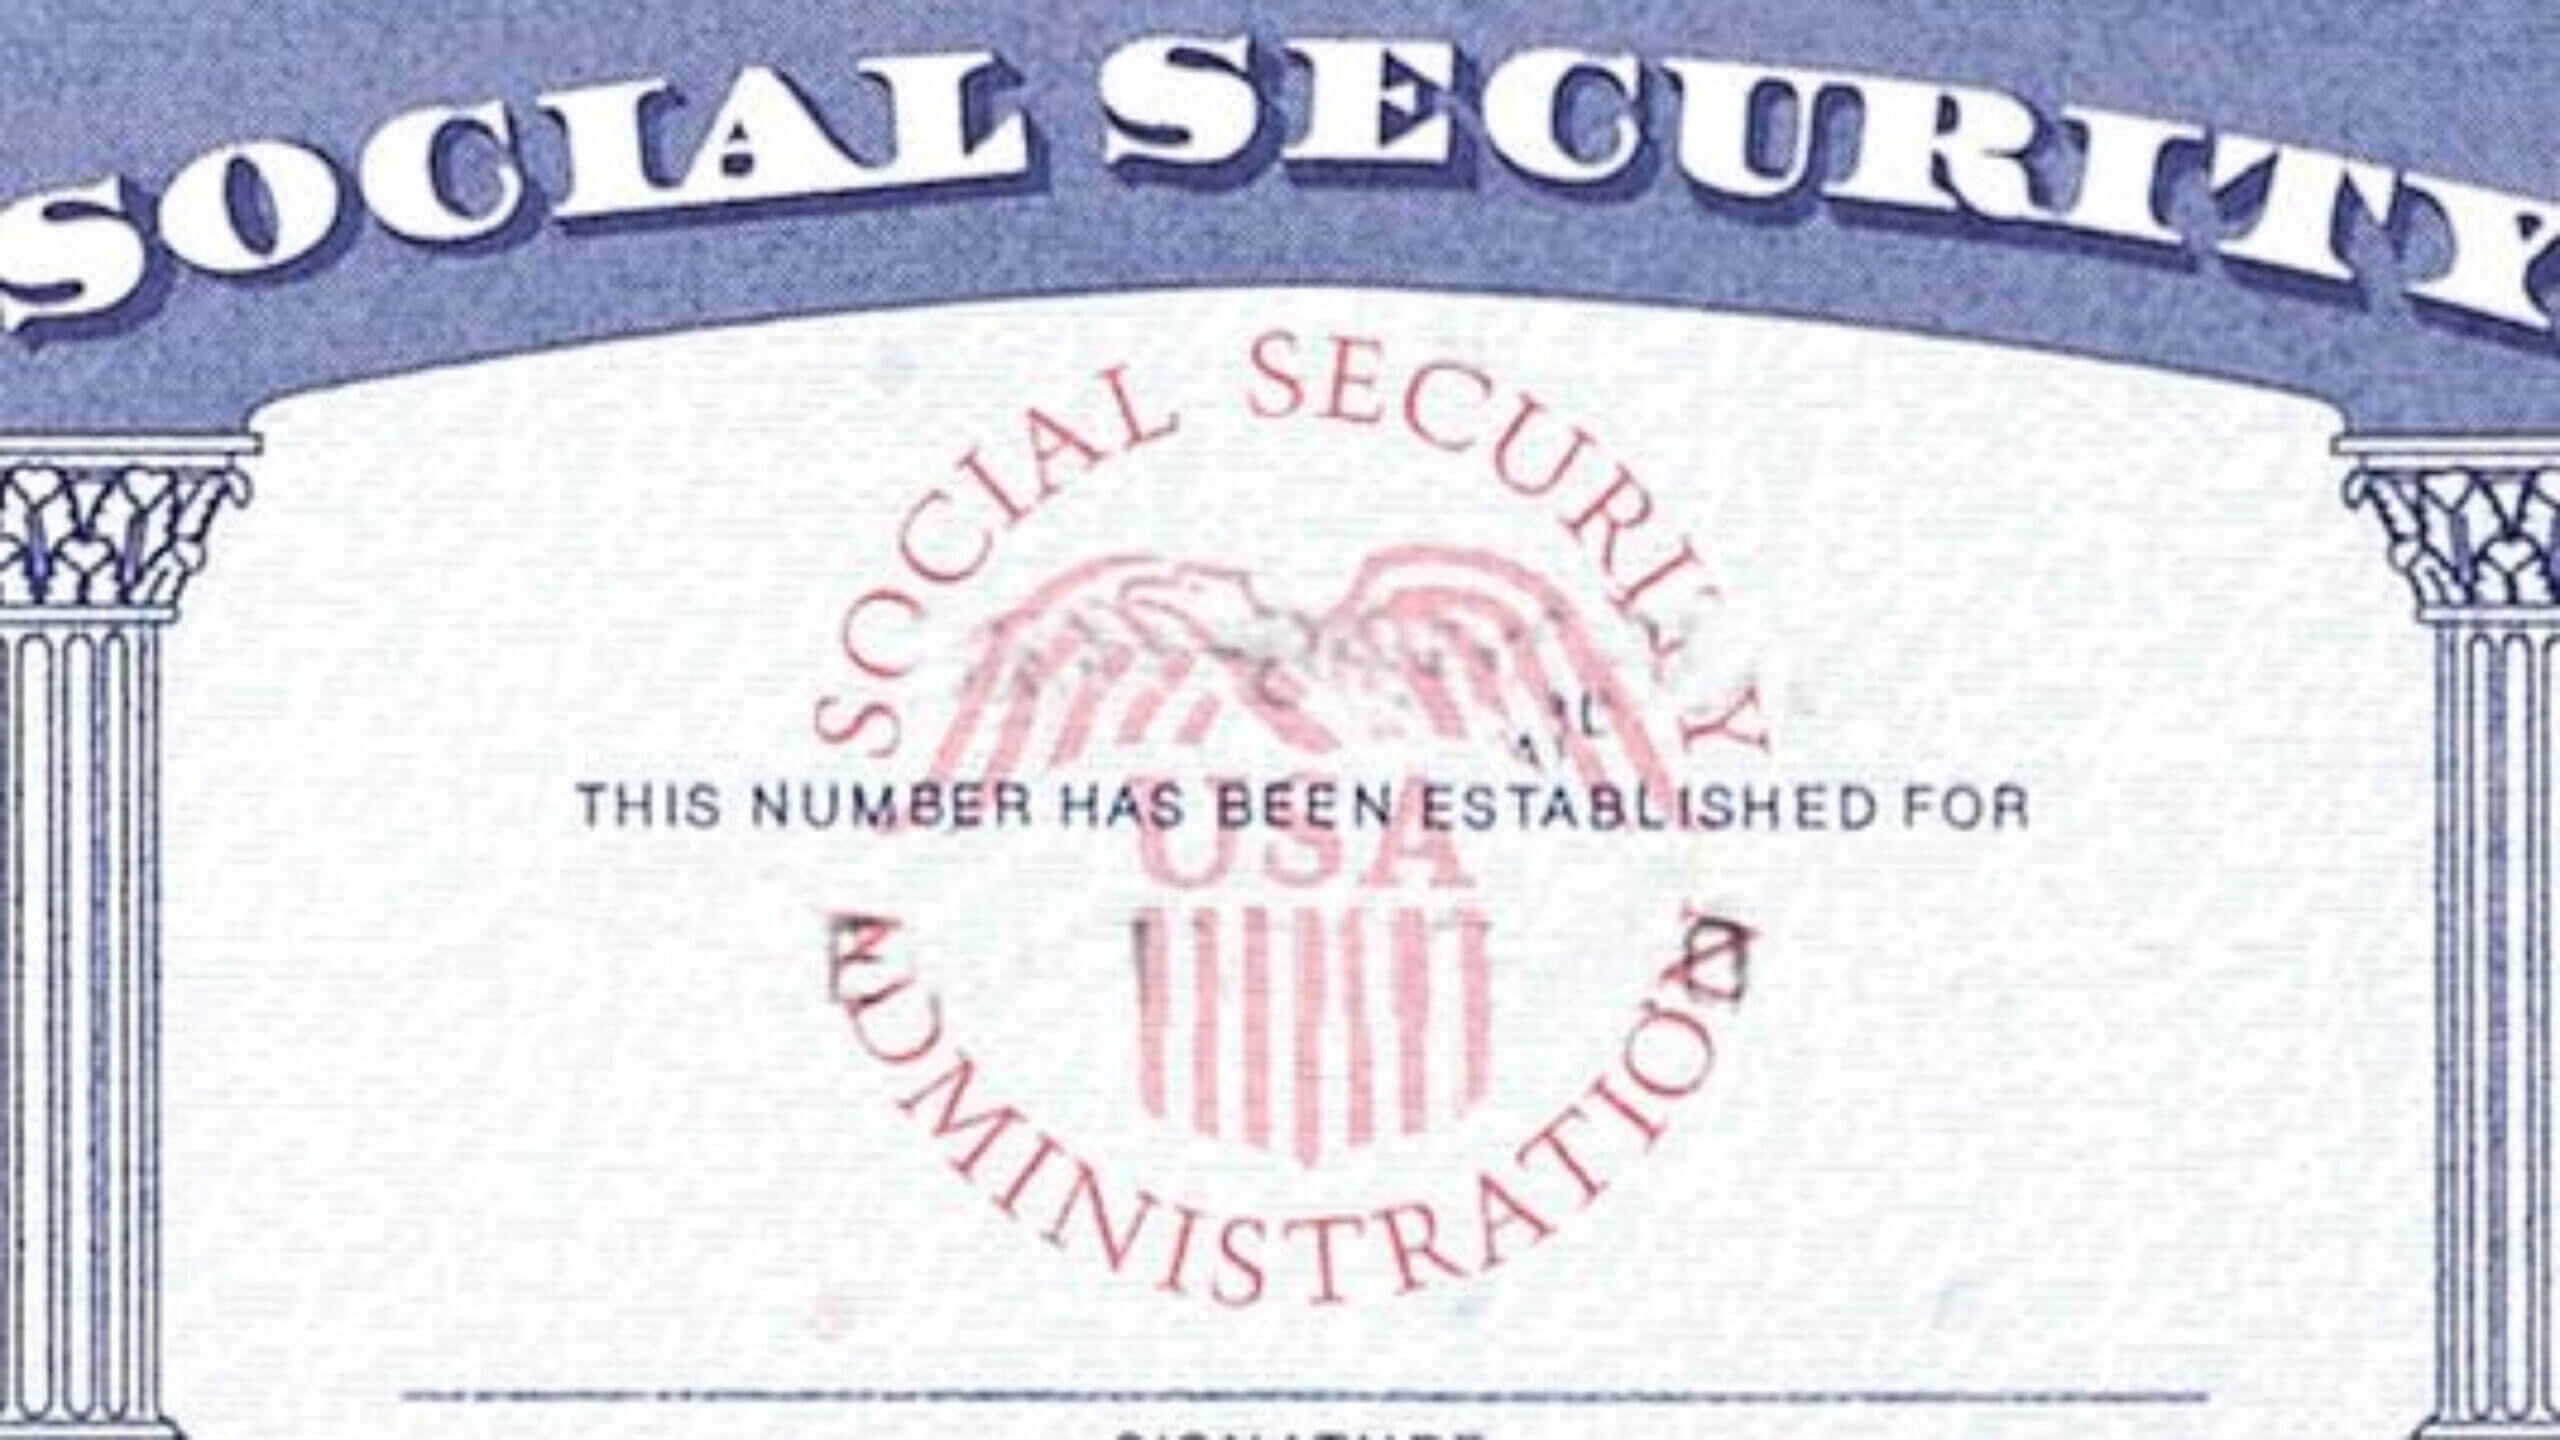 Bradley Scott Smith In 2019 | Templates, Cards, Card Templates Regarding Editable Social Security Card Template